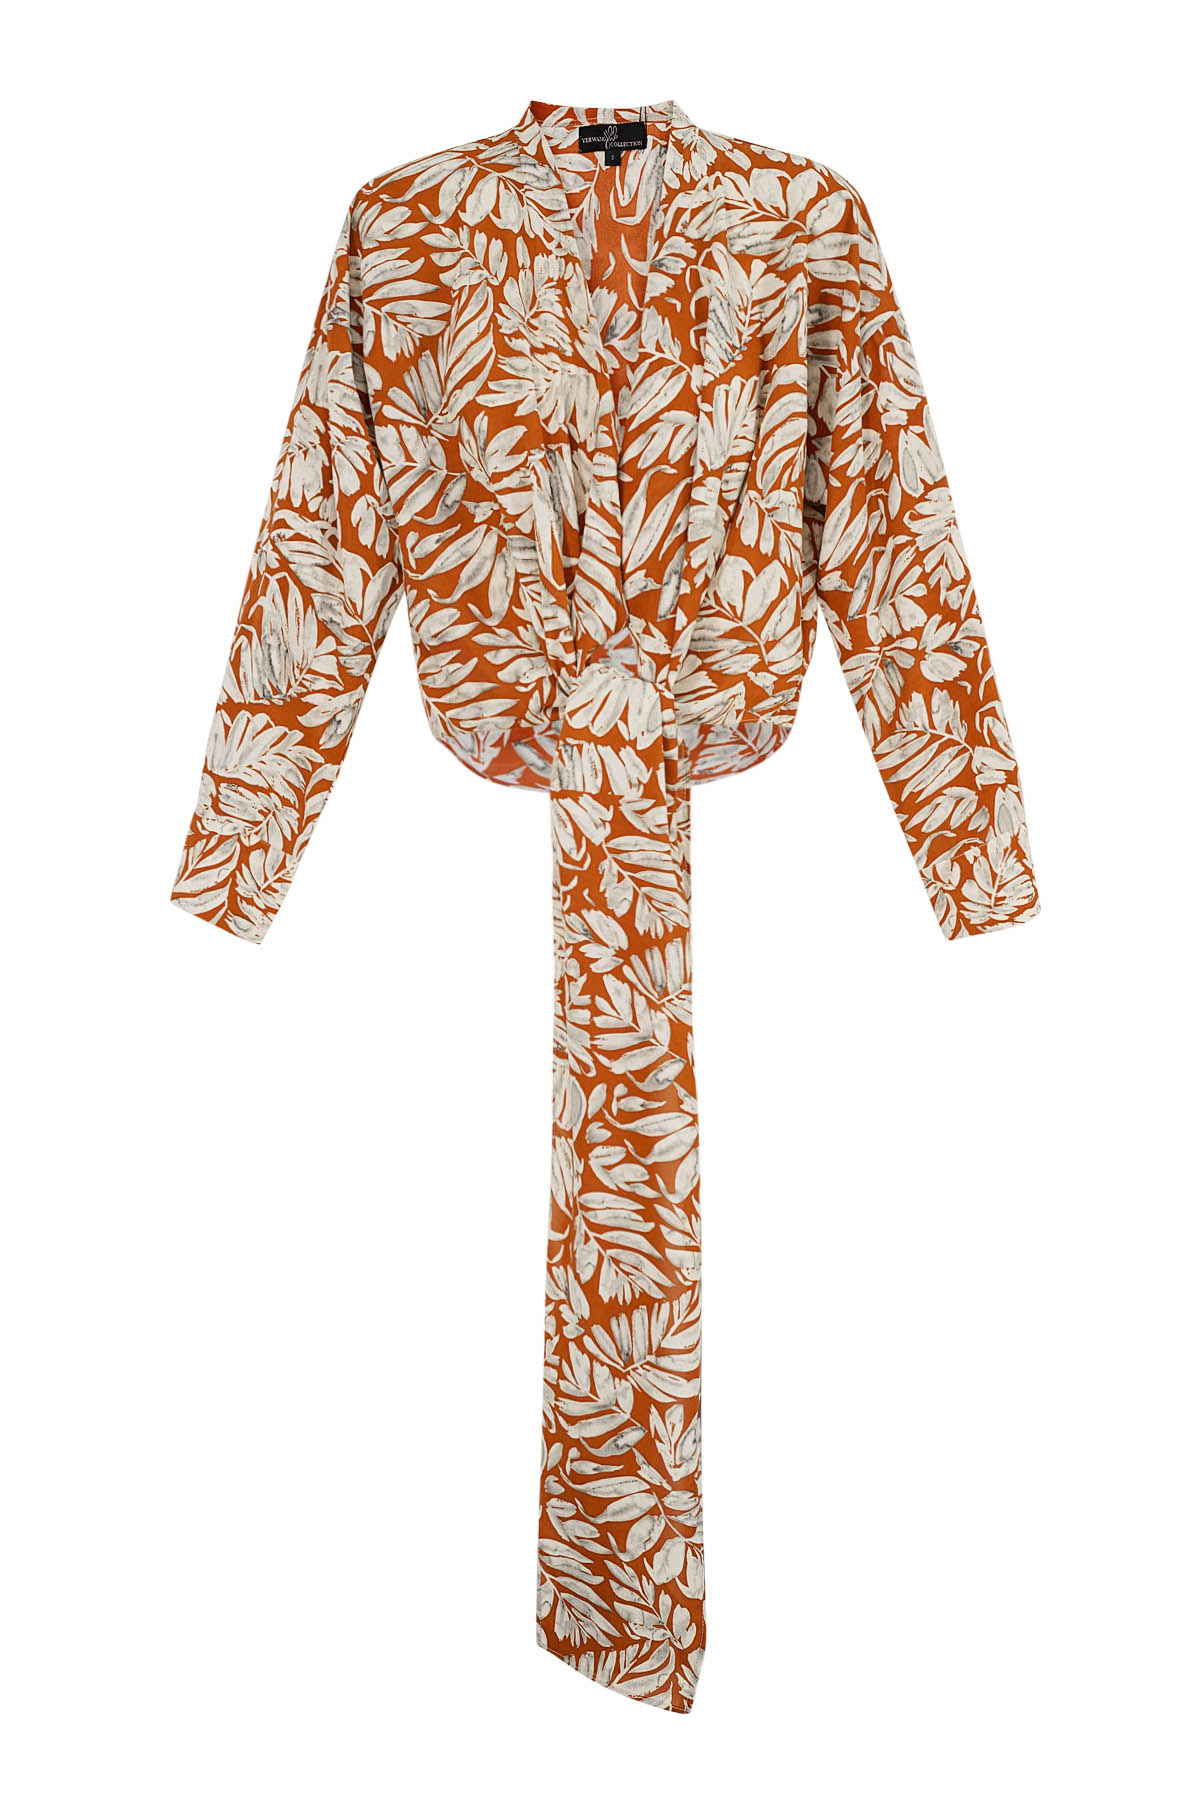 Blusa cruzada estampado hojas naranja h5 